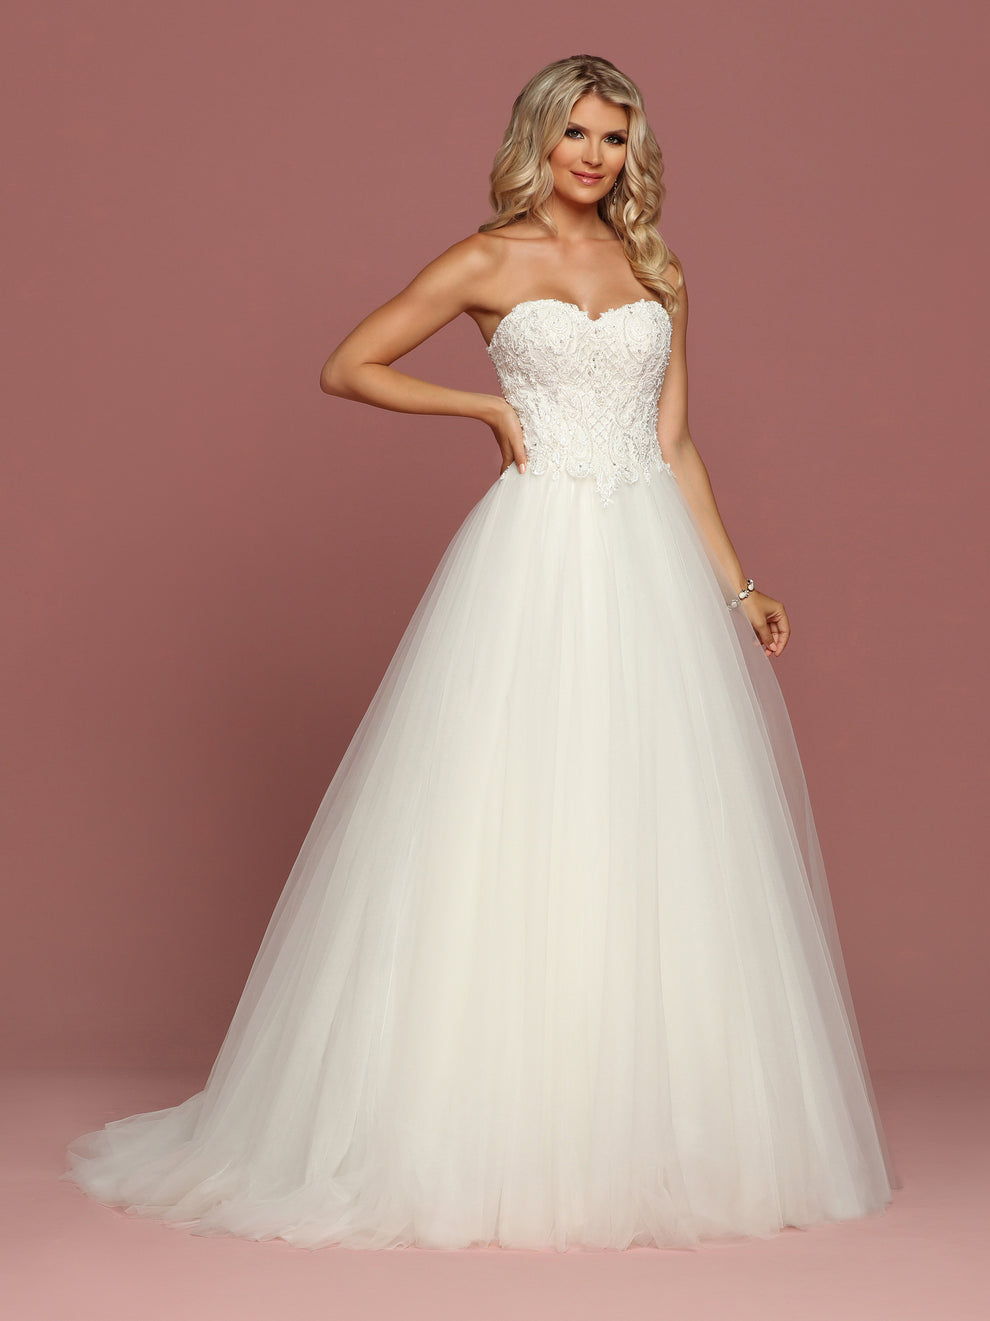 Davinci Bridal 50487 Embellished Lace Tulle Ballgown Wedding Dress Str Glass Slipper Formals 7245